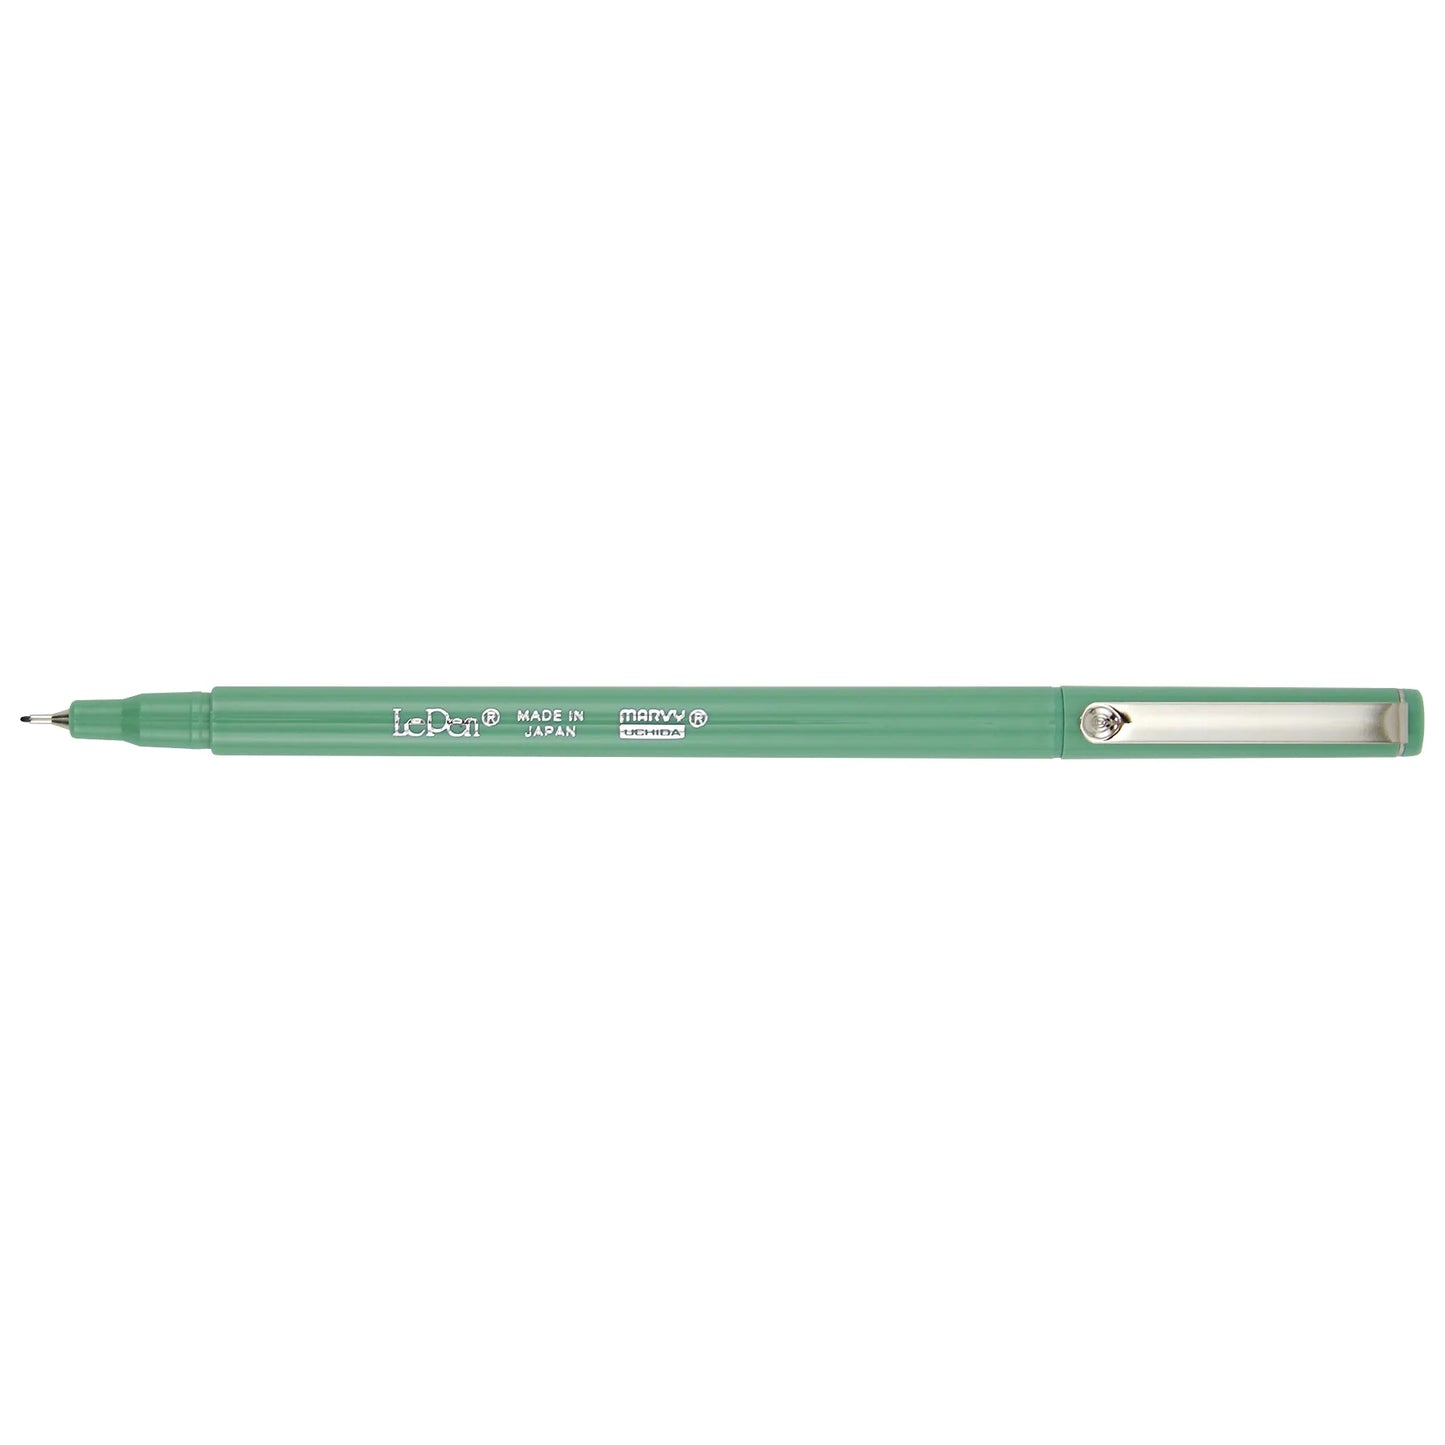 Le Pen fine tip colored pen -- green 